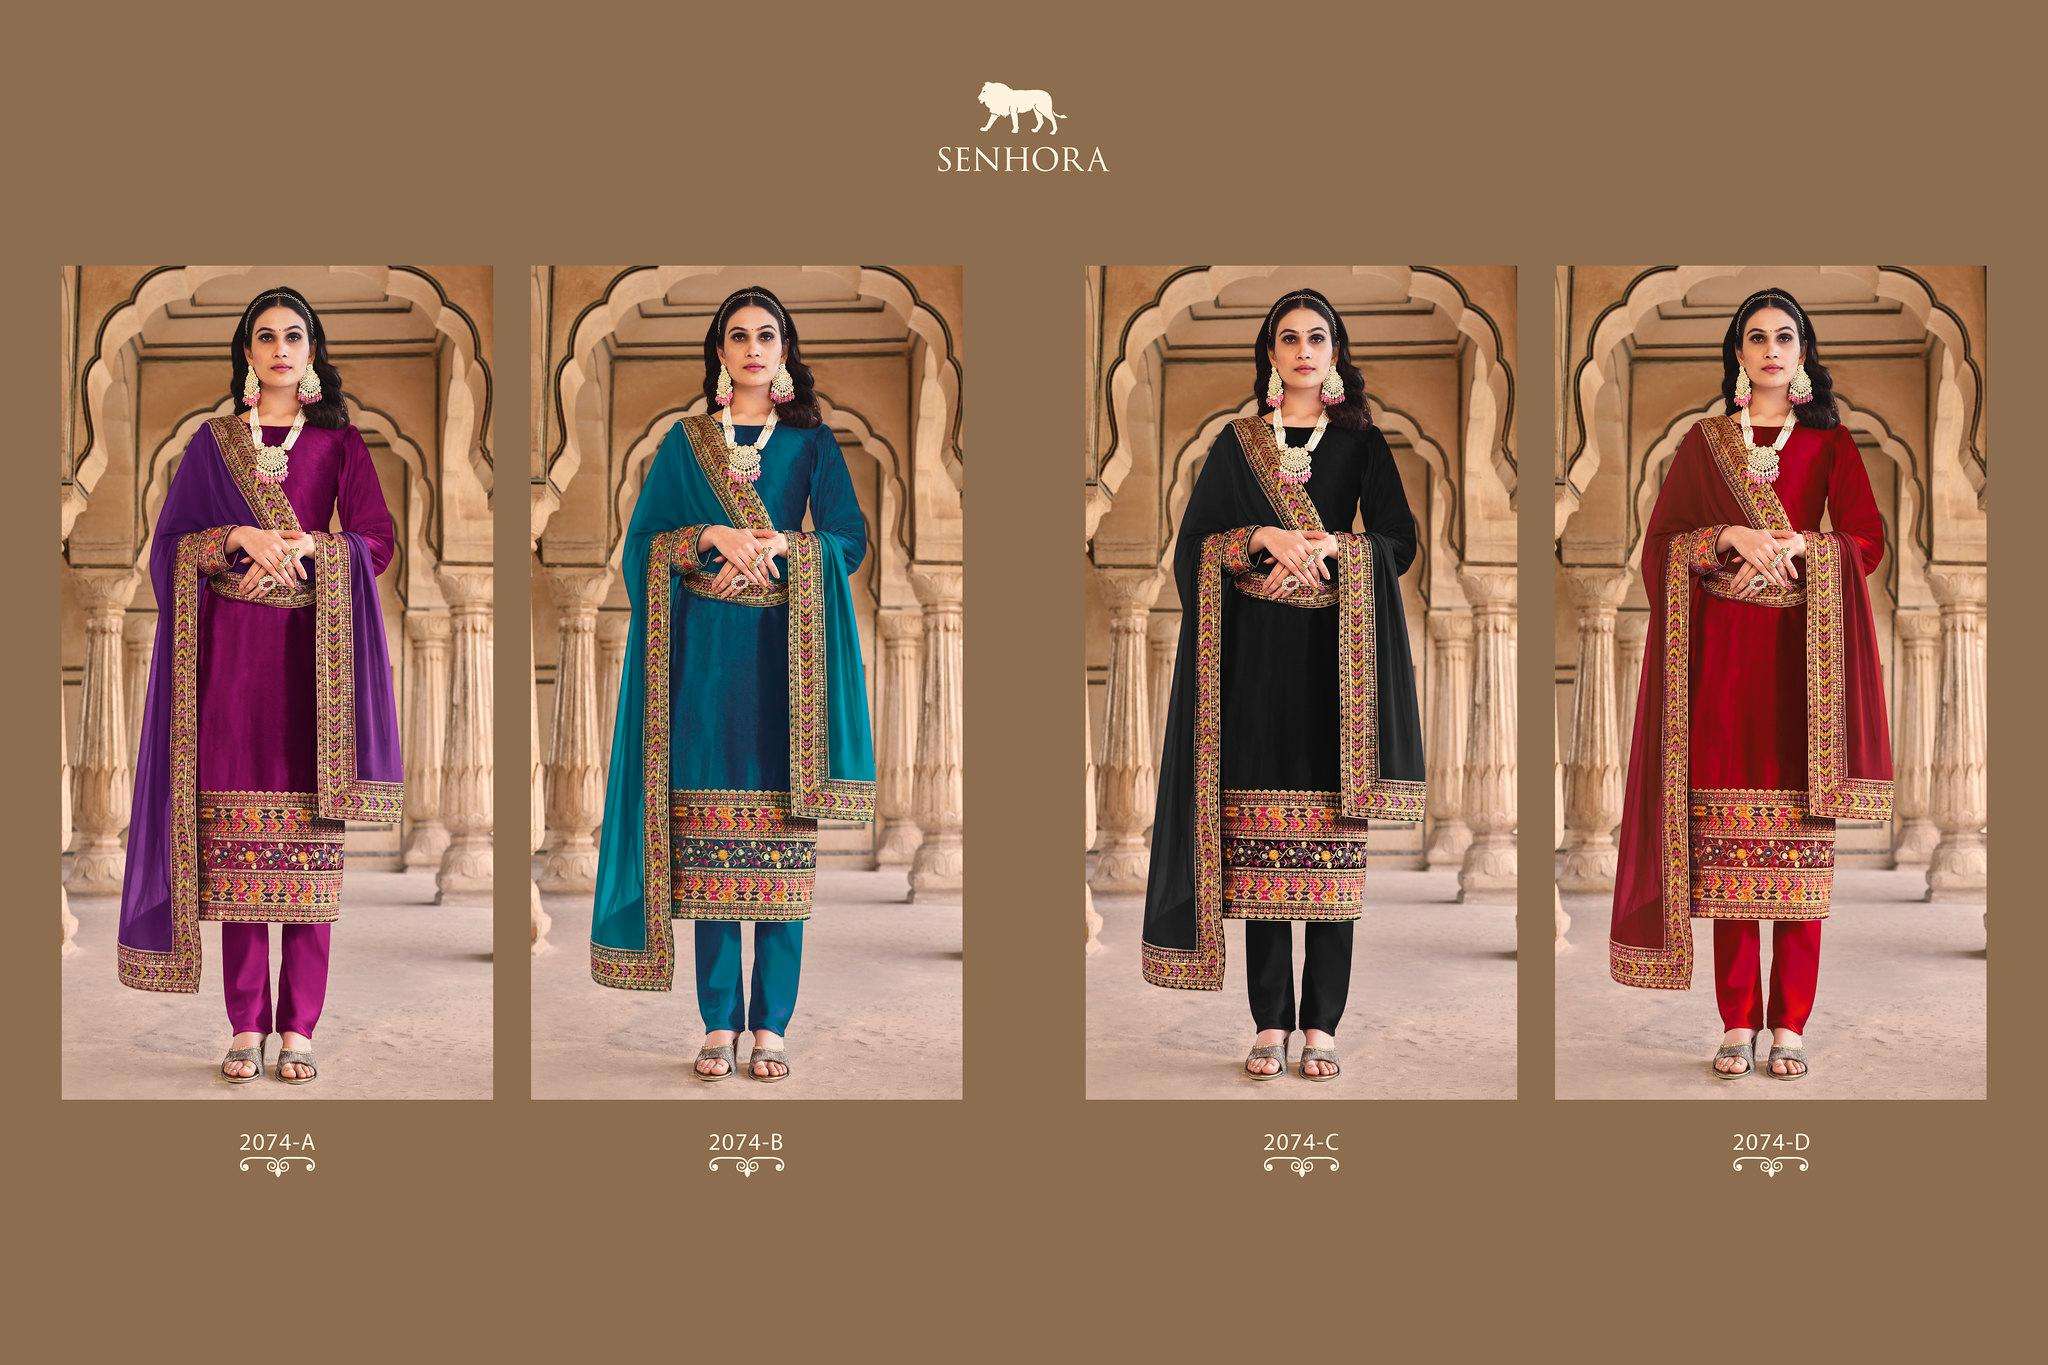 senhora aadhya vol-2 2074 colour series latest wedding wear salwar kameez wholesaler surat gujarat